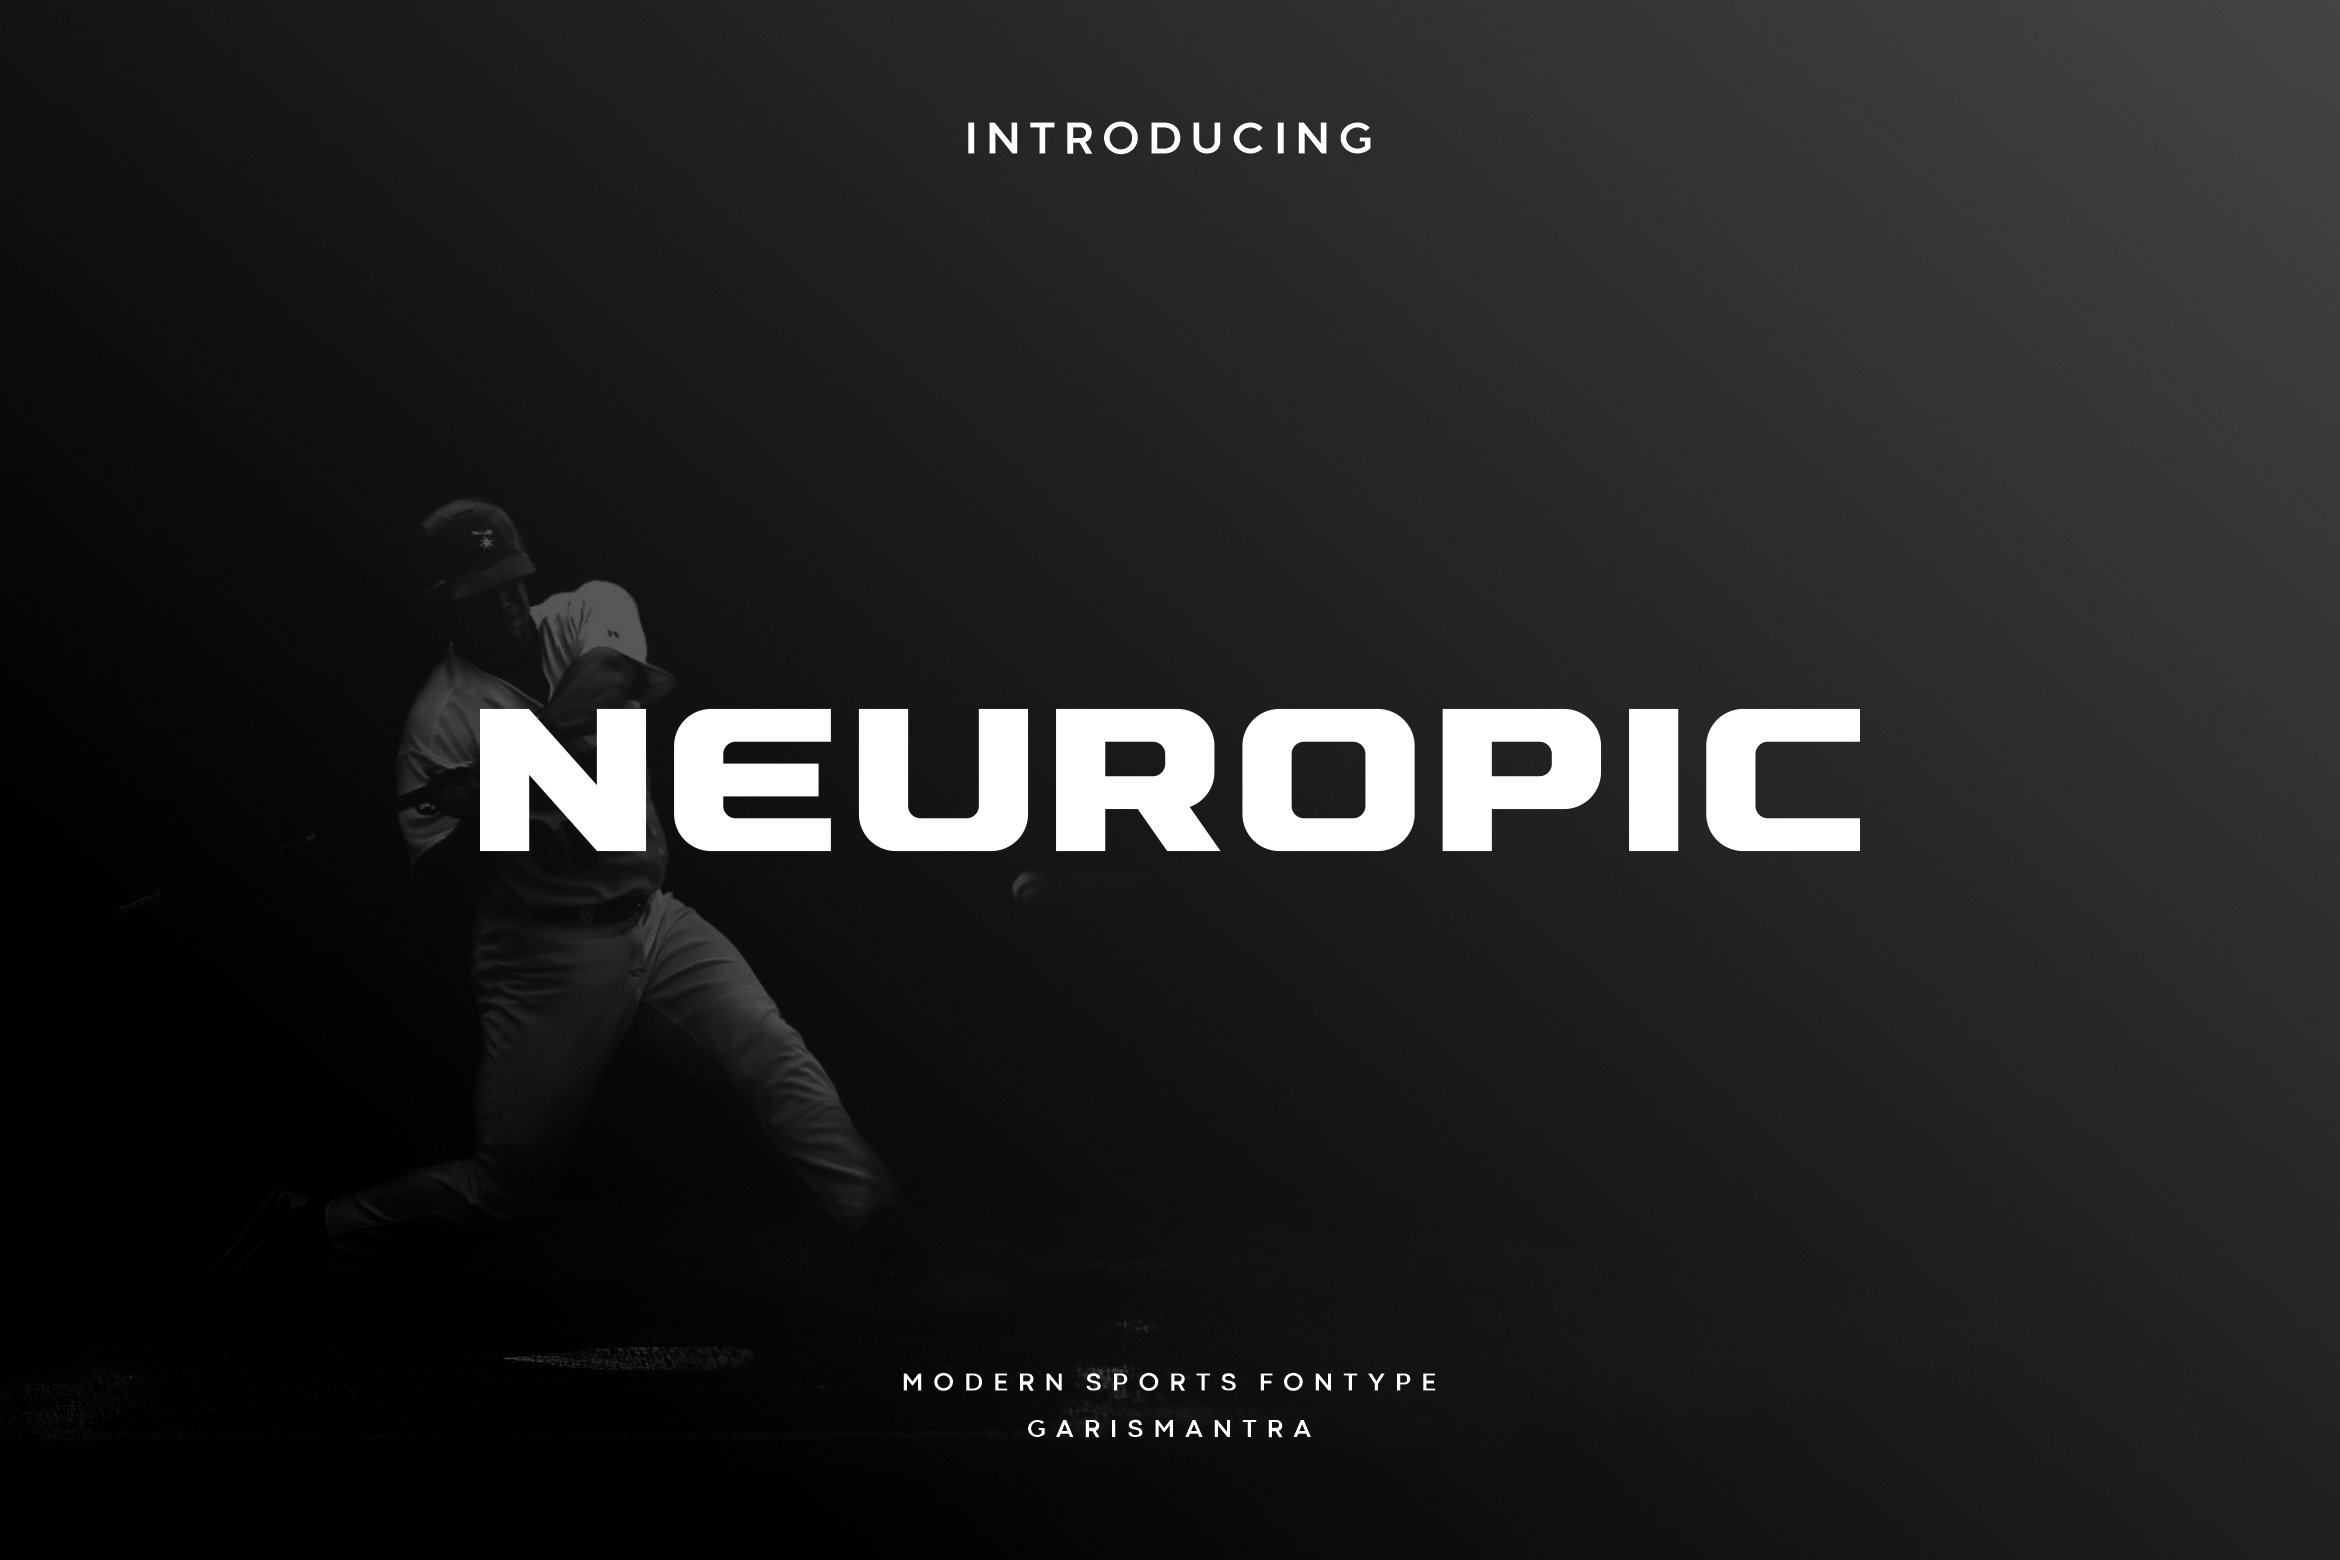 Neuropic cover image.